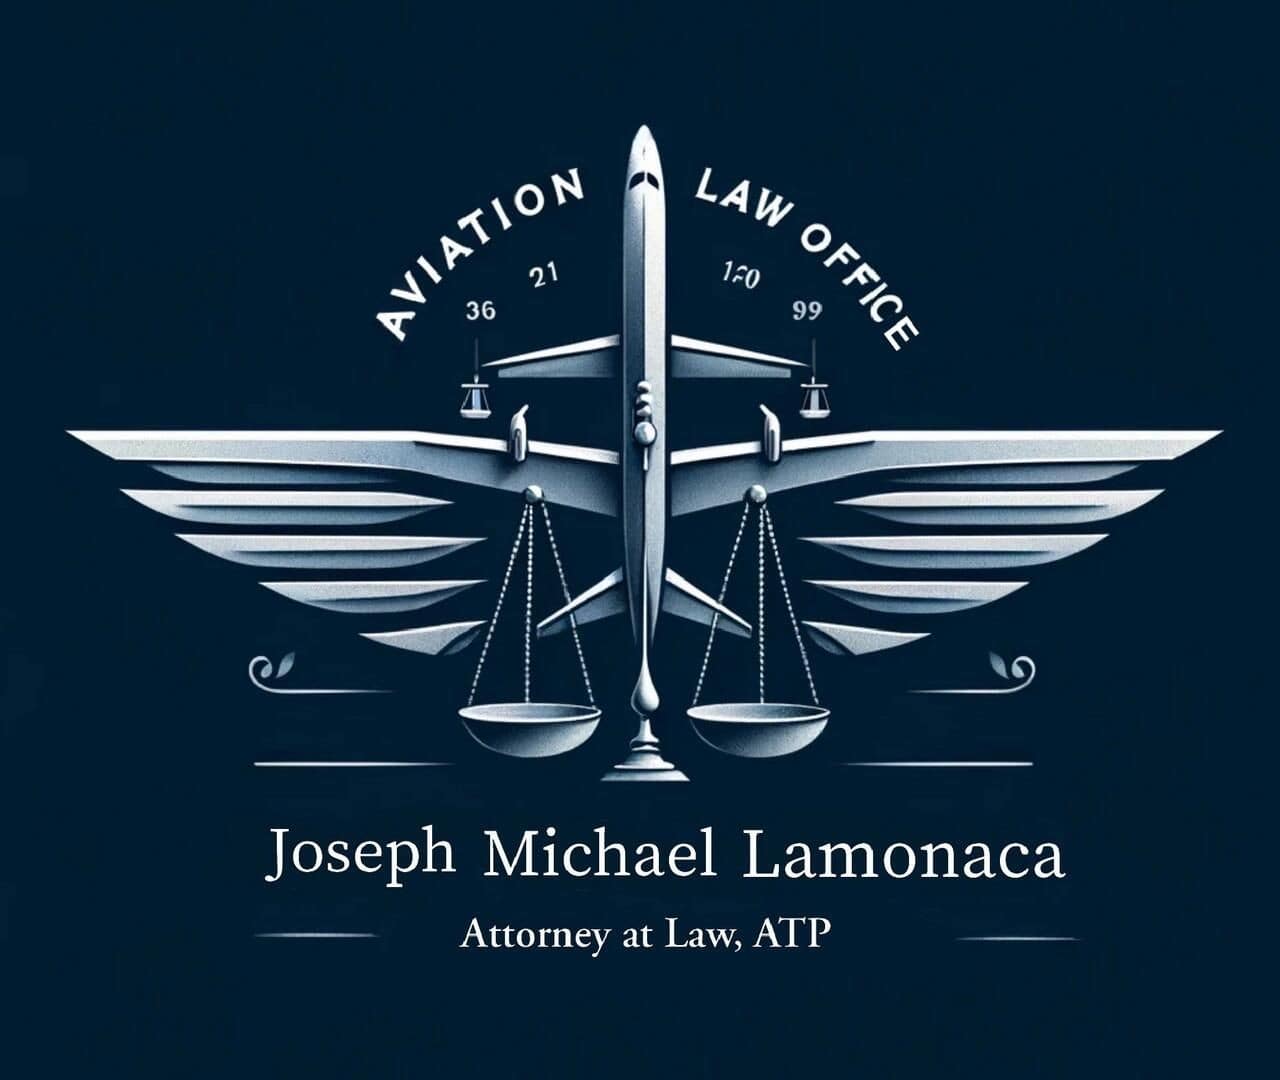 Aviation Law Office of Joseph Michael Lamonaca, Attorney at Law, ATP